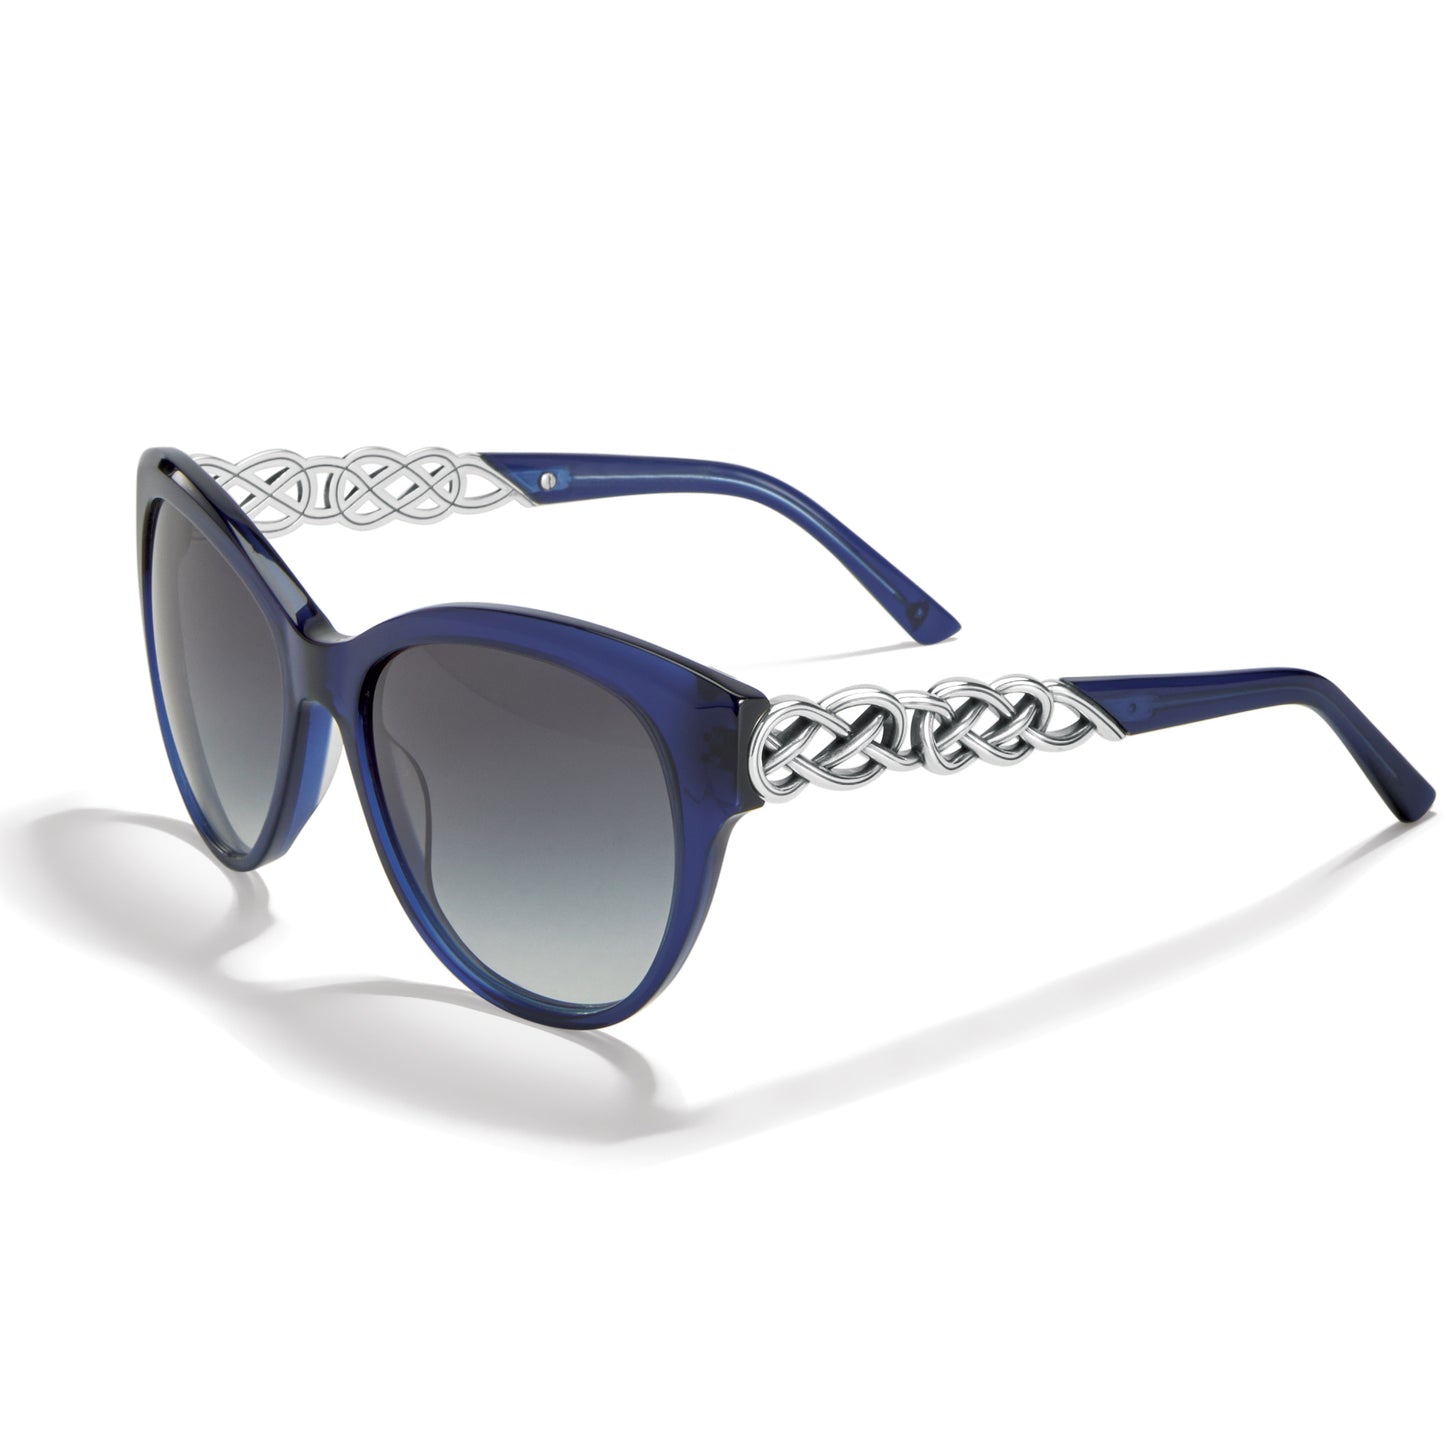 Interlok Braid Sunglasses, Blue